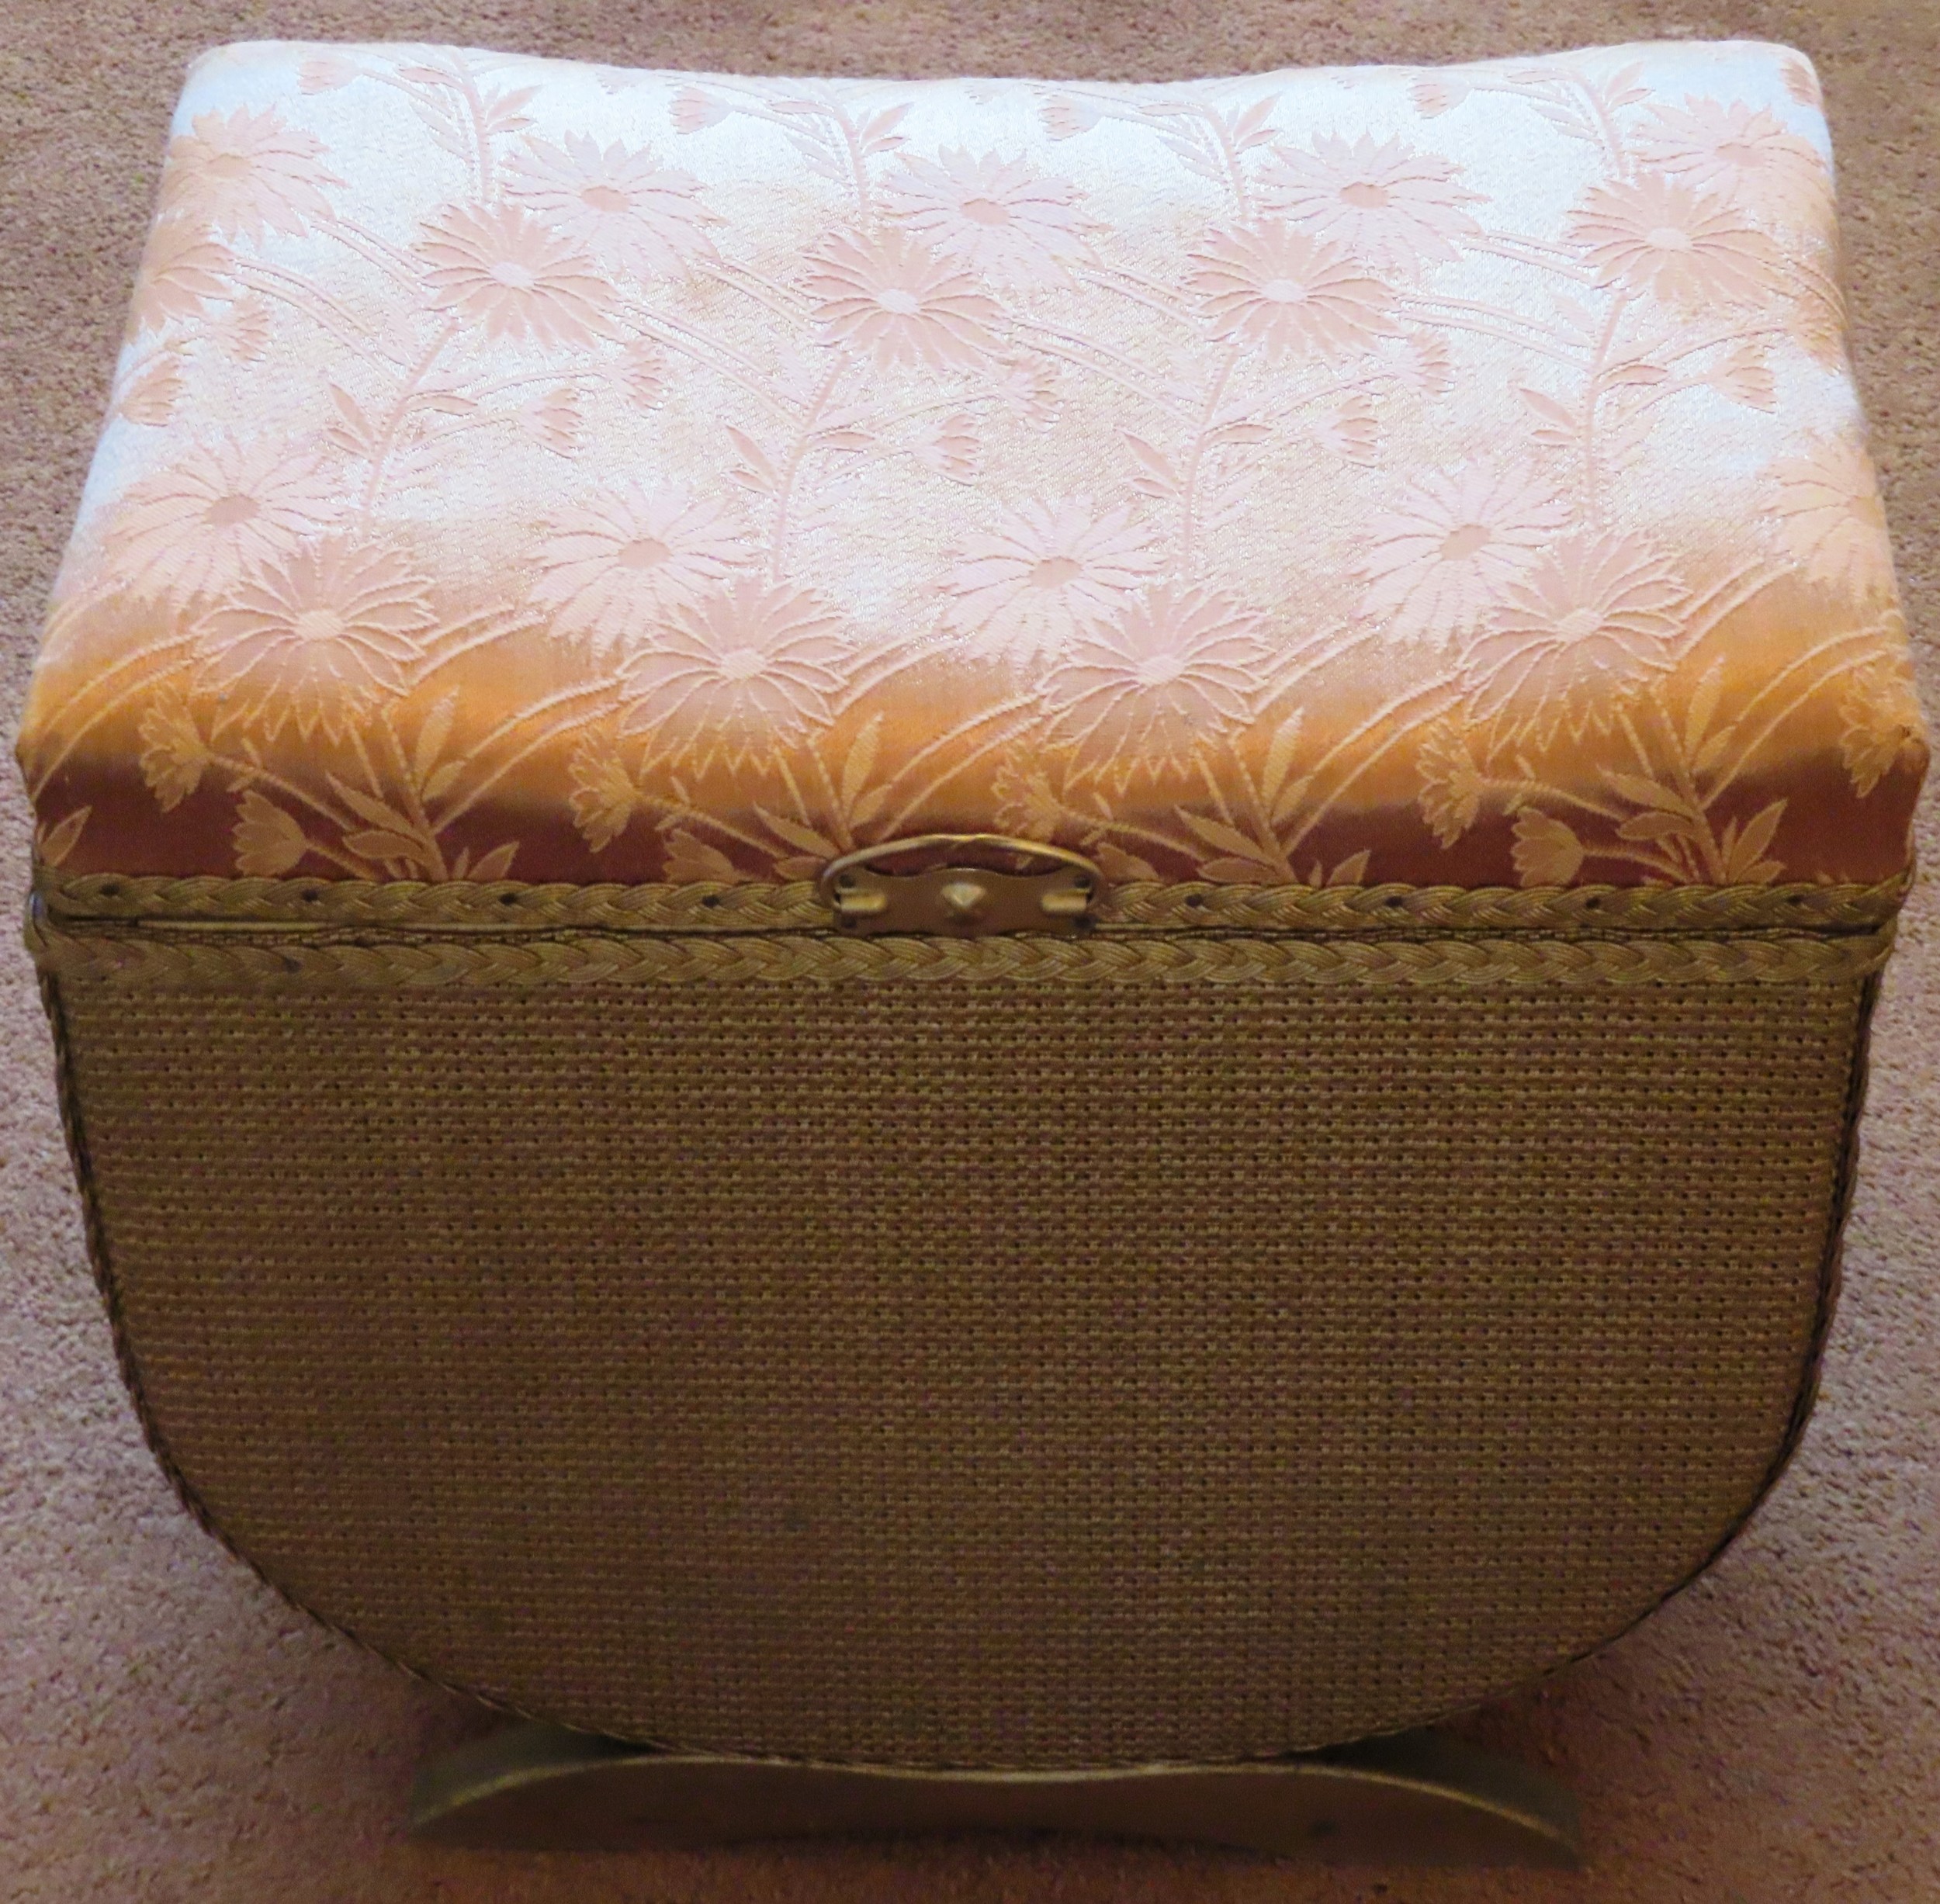 Small vintage single Lloyd Loom style linen basket reasonable used condition